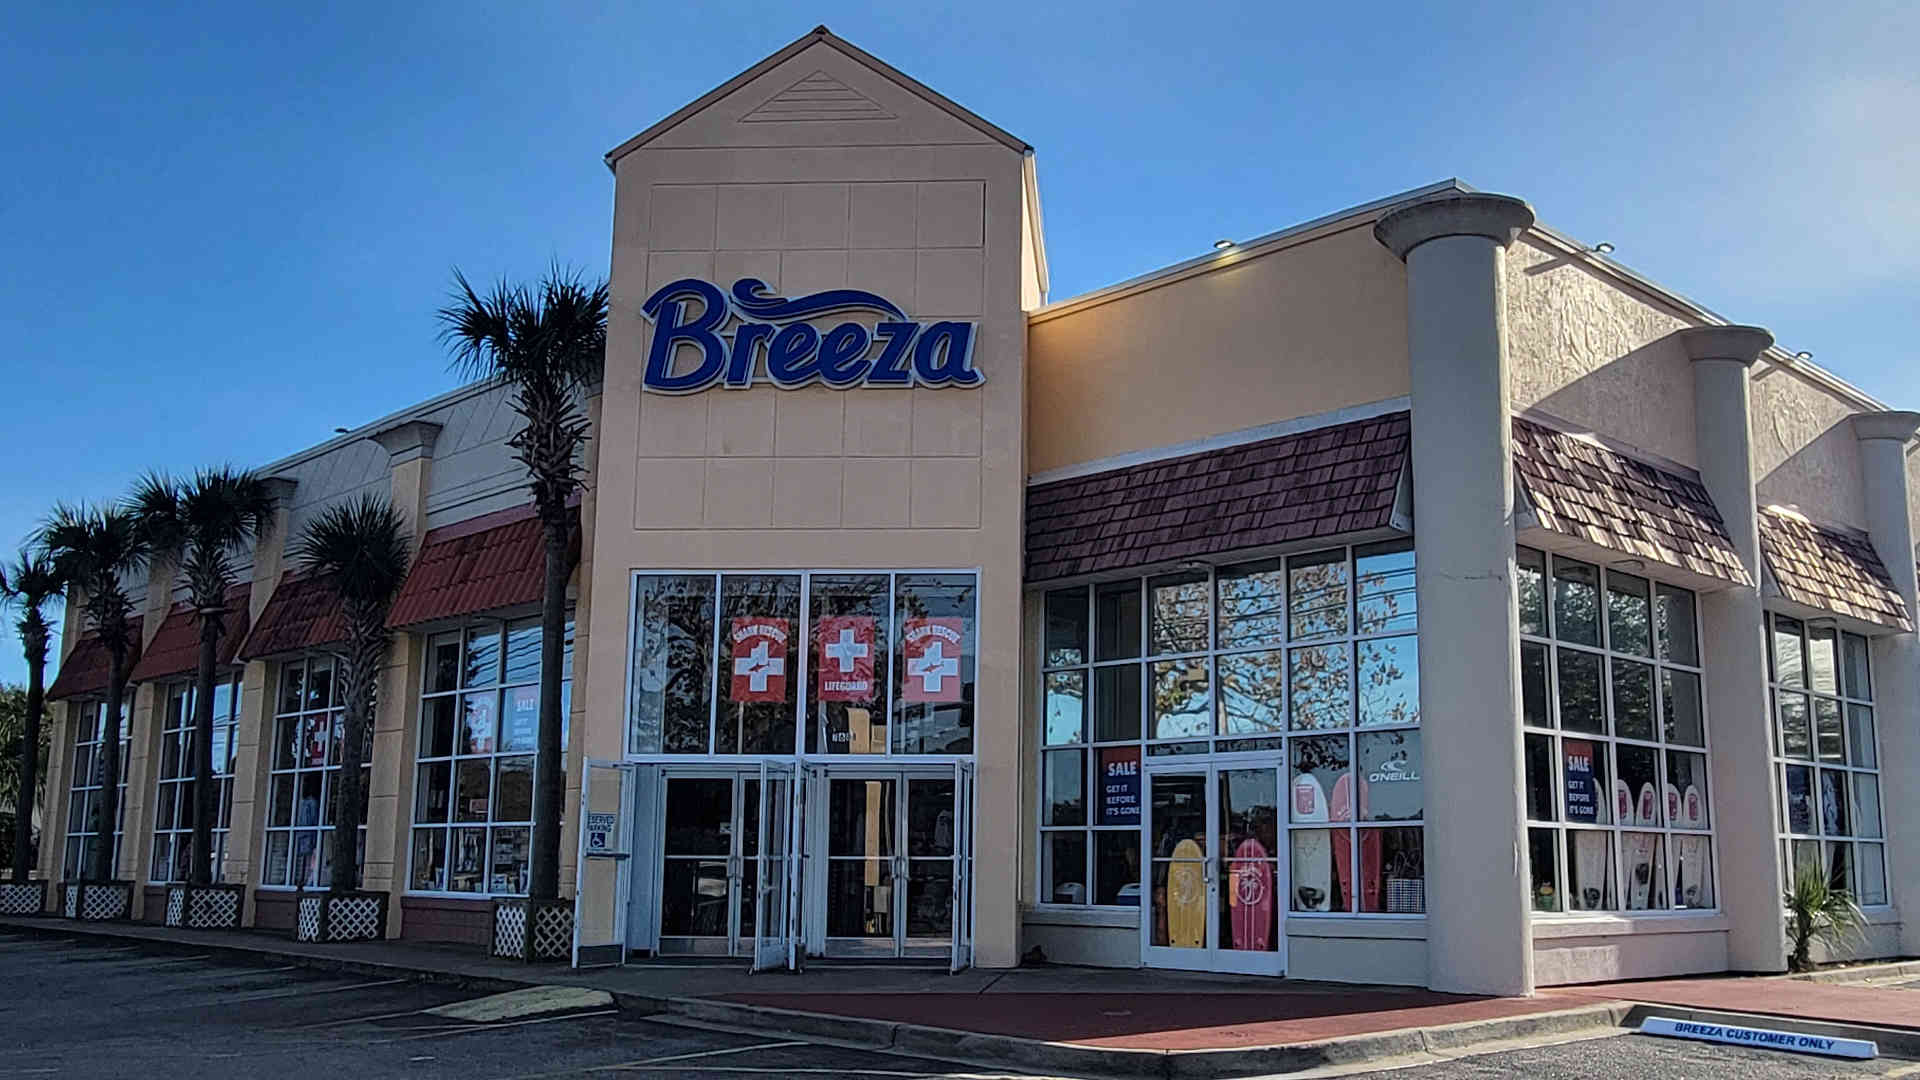 Photo of the Breeza Store Location in Myrtle Beach, SC